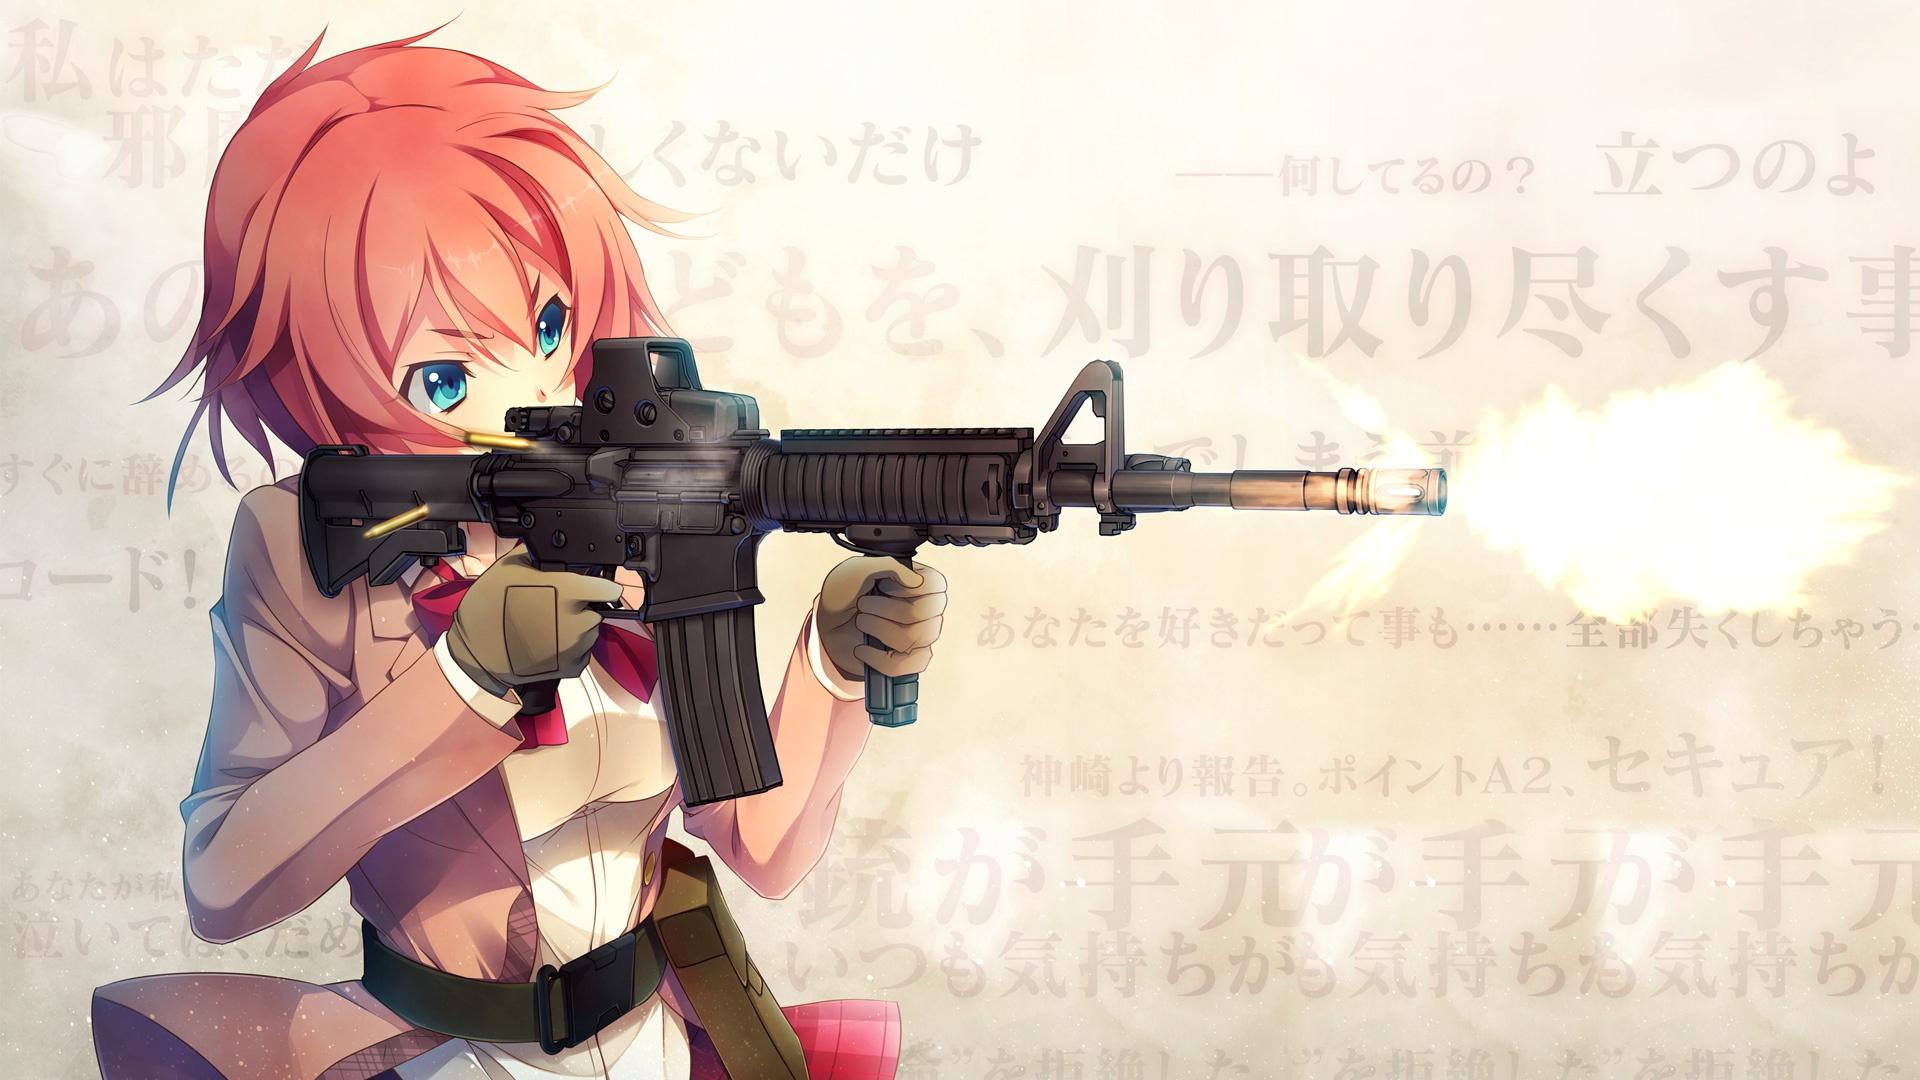 Create meme anime anime girls with guns cool anime  Pictures  Meme arsenalcom